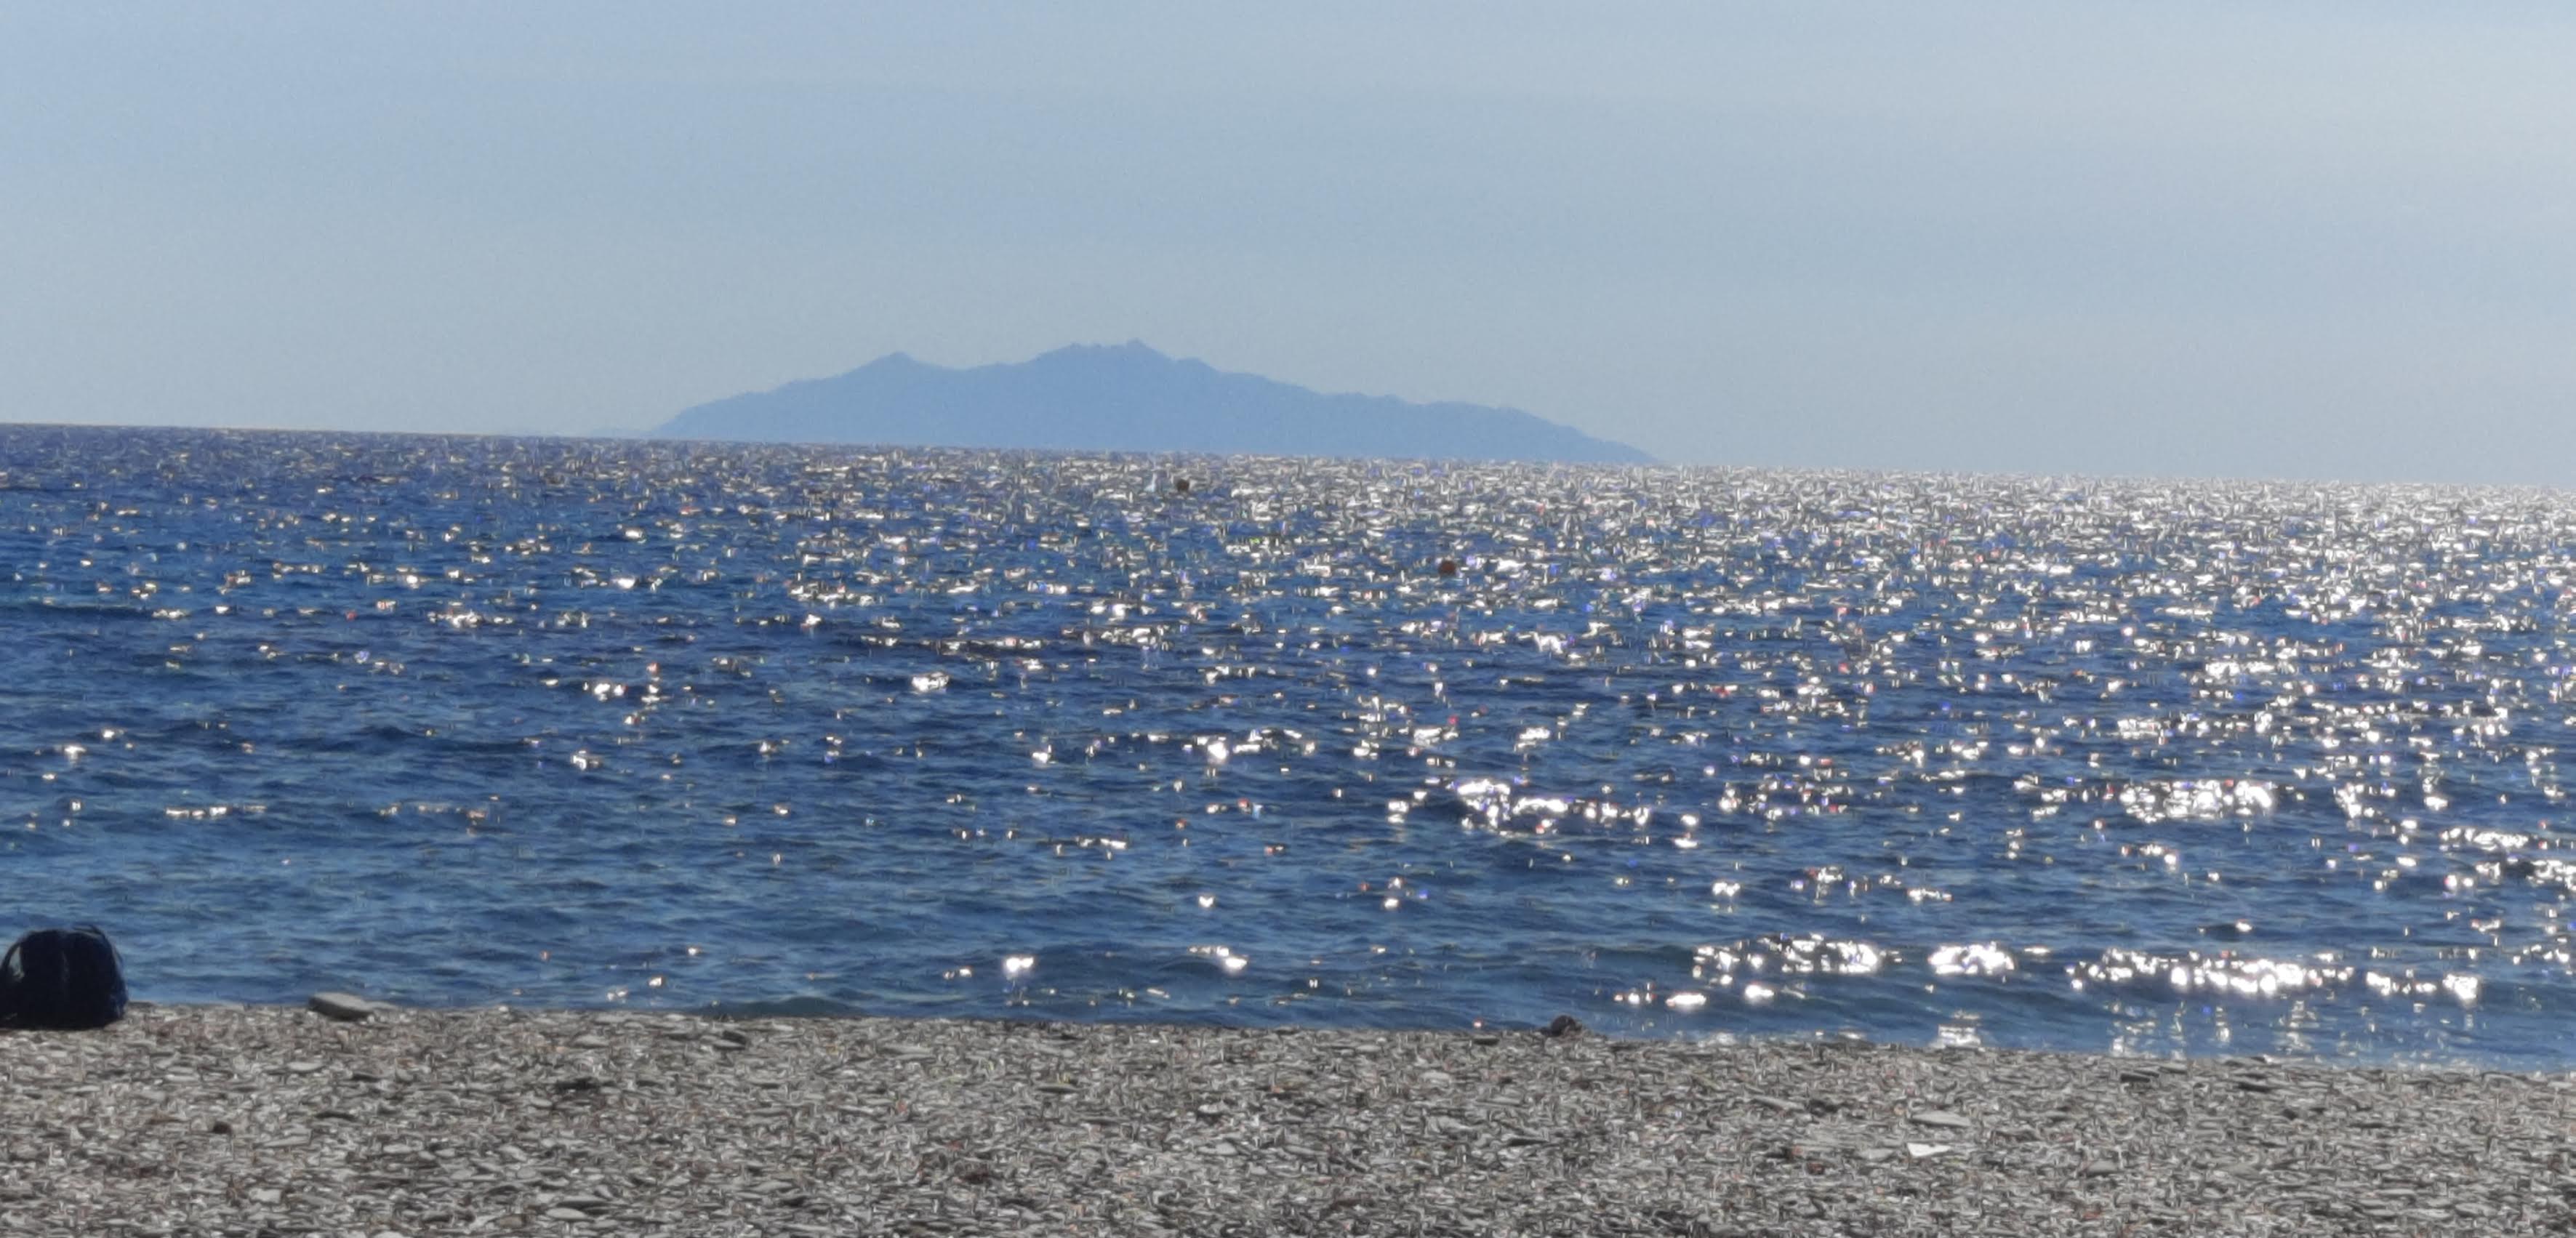 Mare d'argentu et archipel toscan(Graziella Desotgiu)